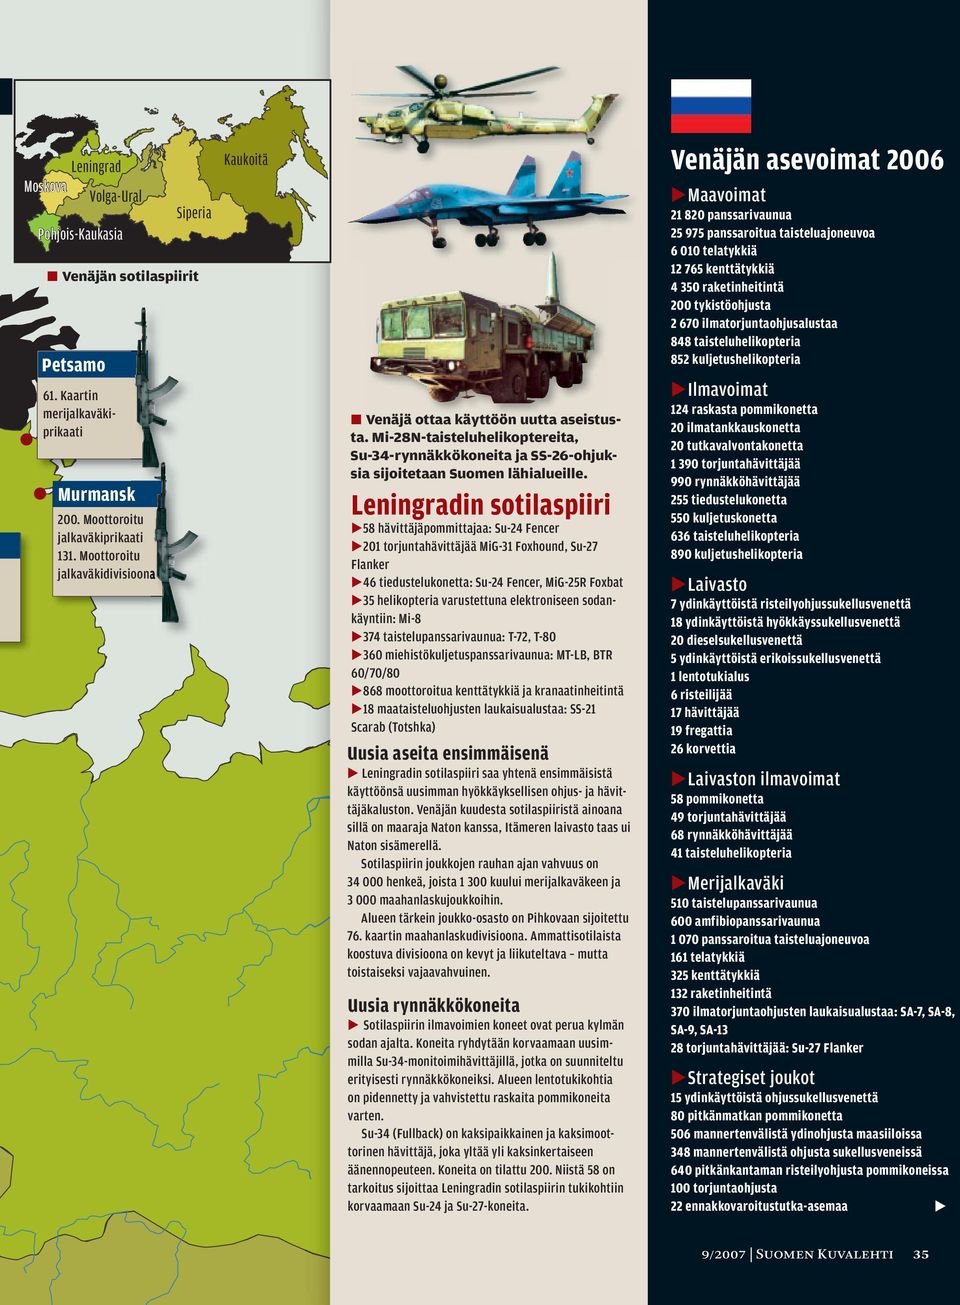 Leningradin sotilaspiiri 58 hävittäjäpommittajaa: Su-24 Fencer 201 torjuntahävittäjää MiG-31 Foxhound, Su-27 Flanker 46 tiedustelukonetta: Su-24 Fencer, MiG-25R Foxbat 35 helikopteria varustettuna